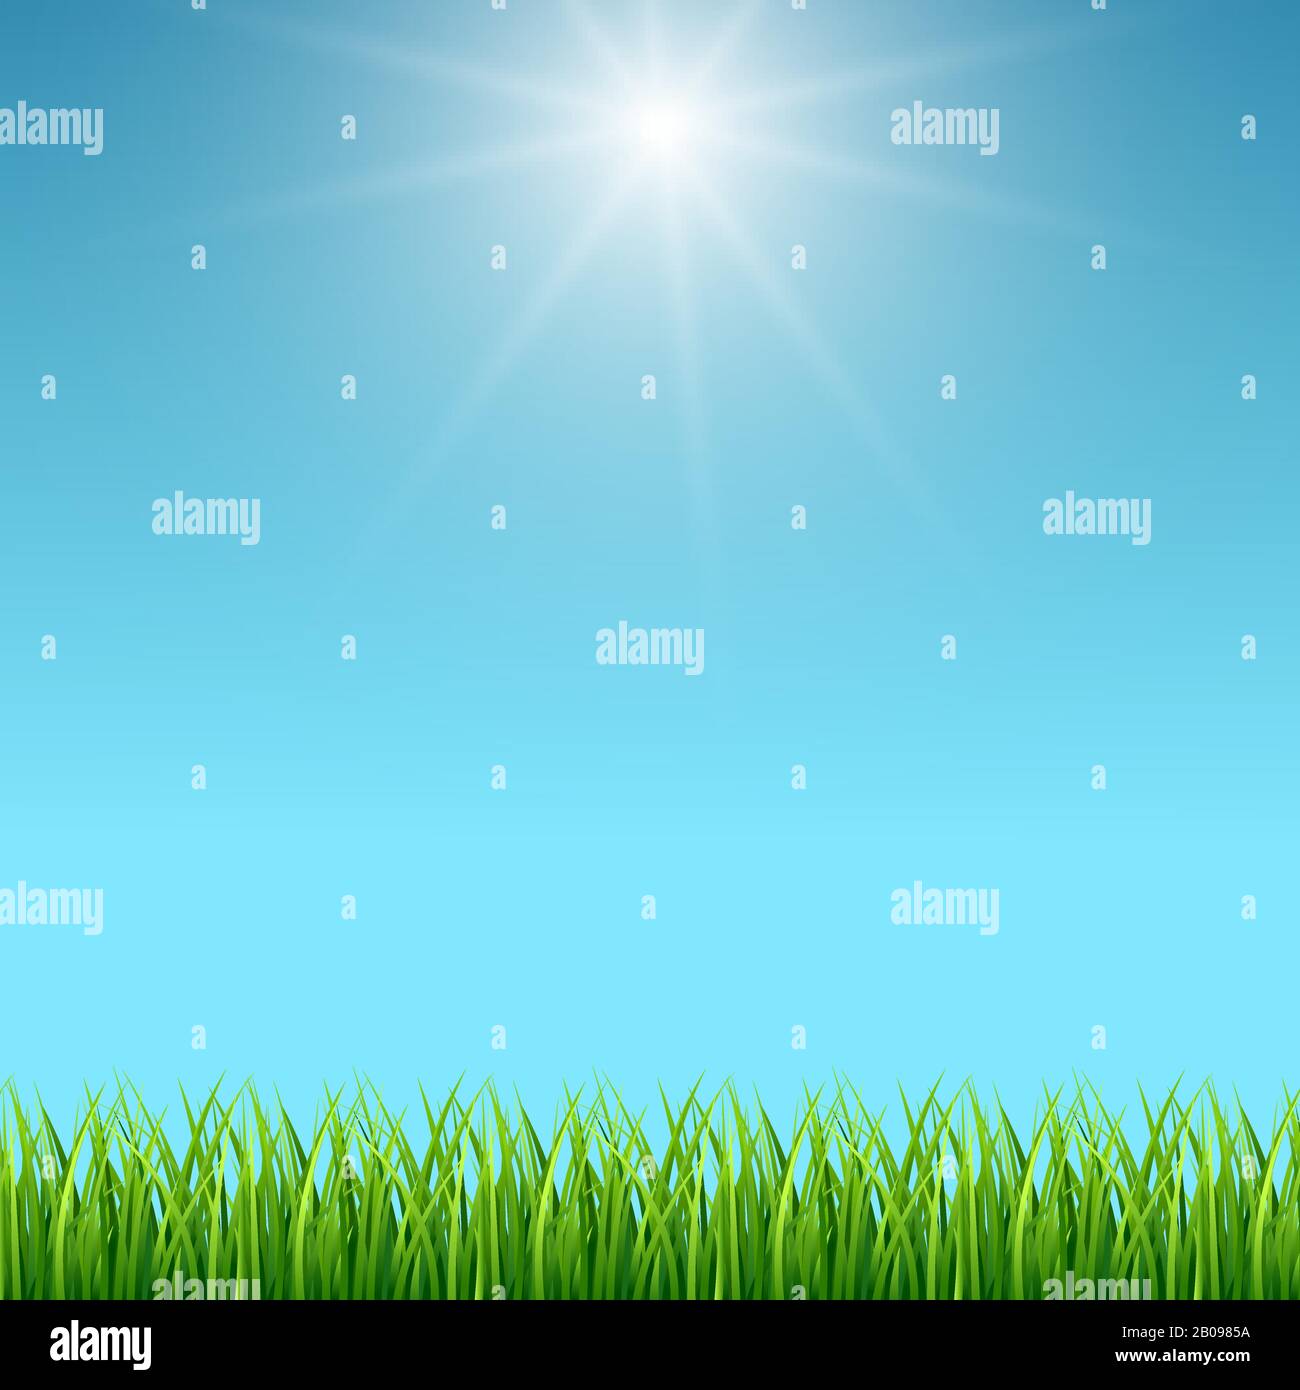 Clean blue sky and green grass vector background. Spring design landscape illustration Stock Vector